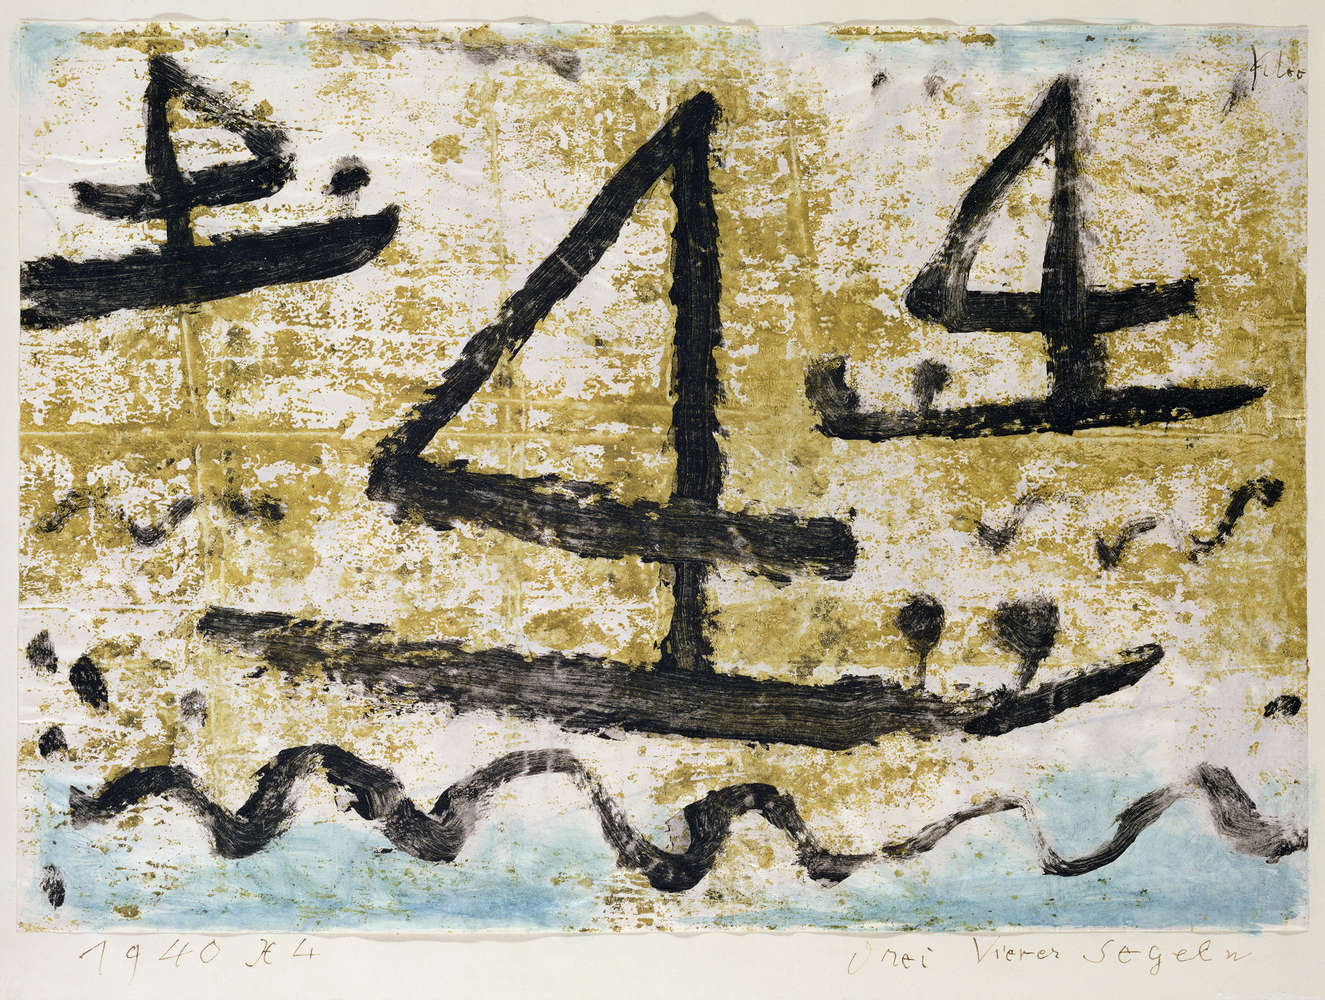             Sailing ships" mural by Paul Klee
        